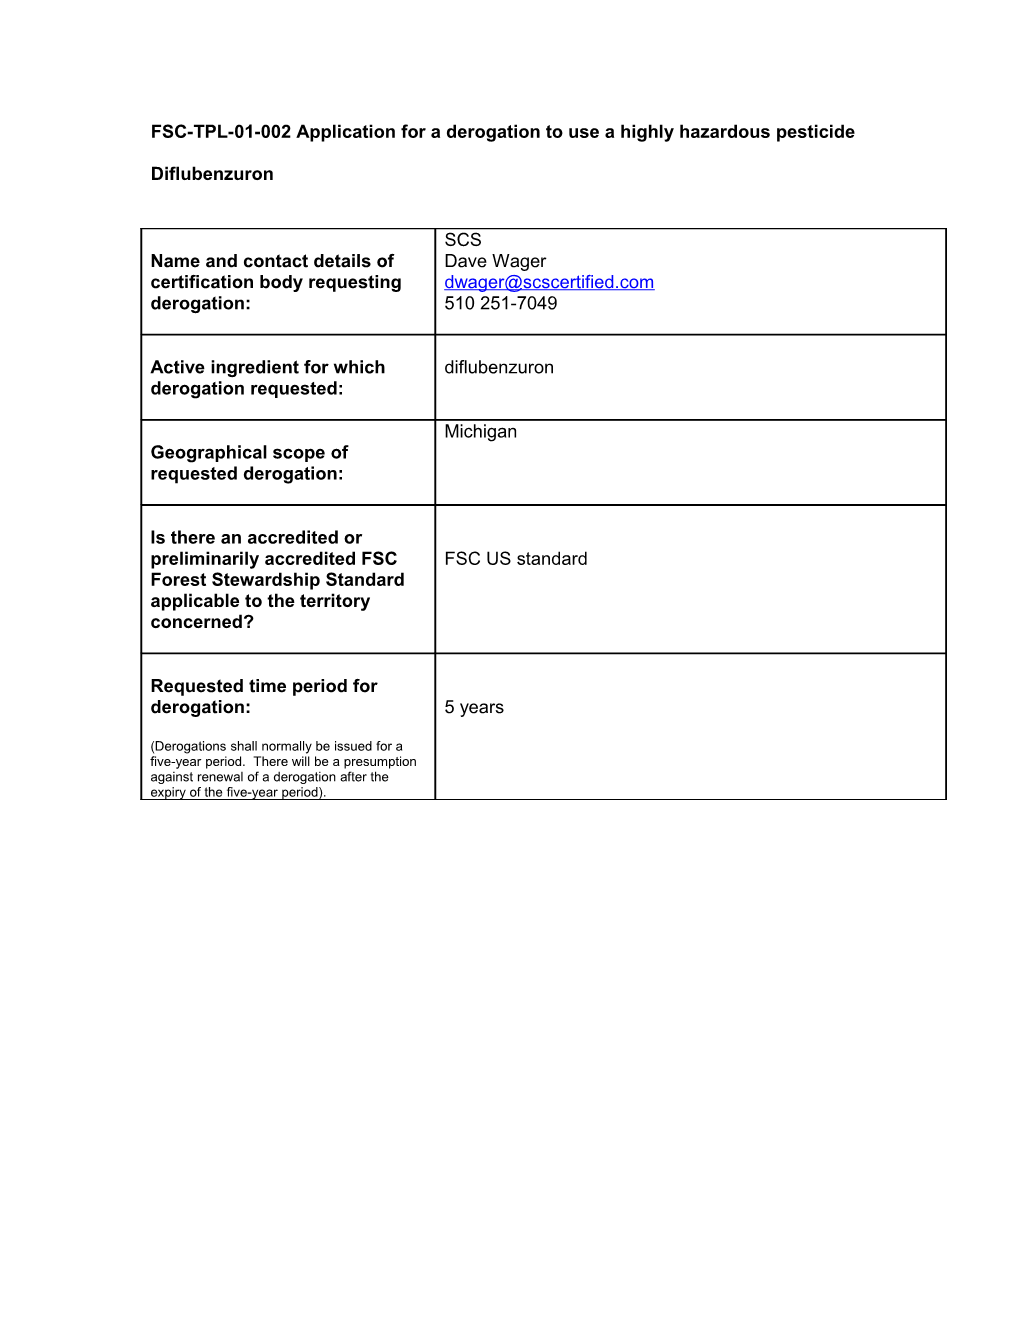 FSC-TPL-01-002 Application for a Derogation to Use a Highly Hazardous Pesticide (2,4-D